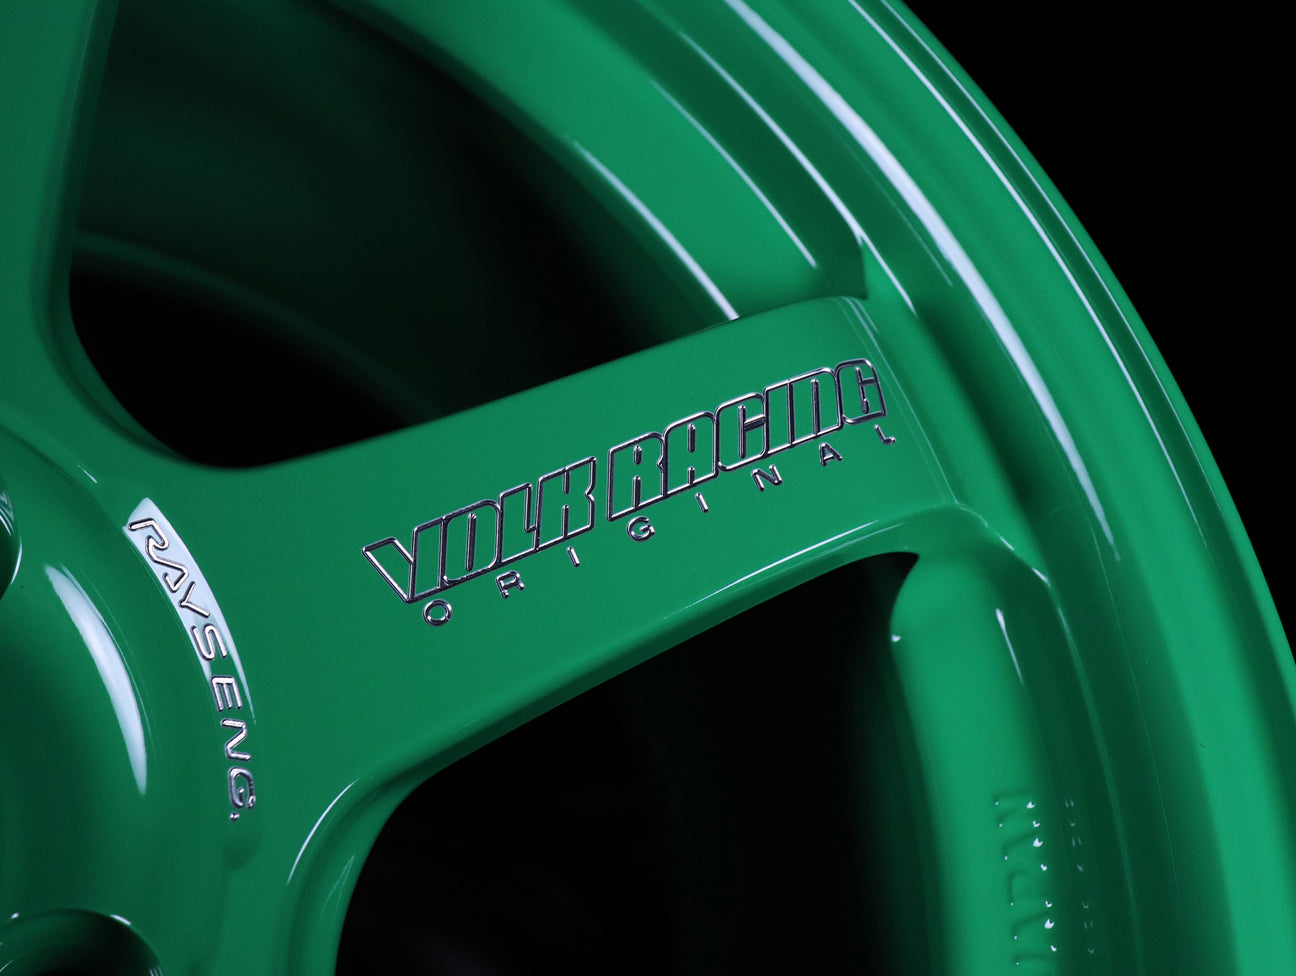 Volk Racing TE37 Sonic Wheels - Takata Green 16x8 / 4x100 / +35